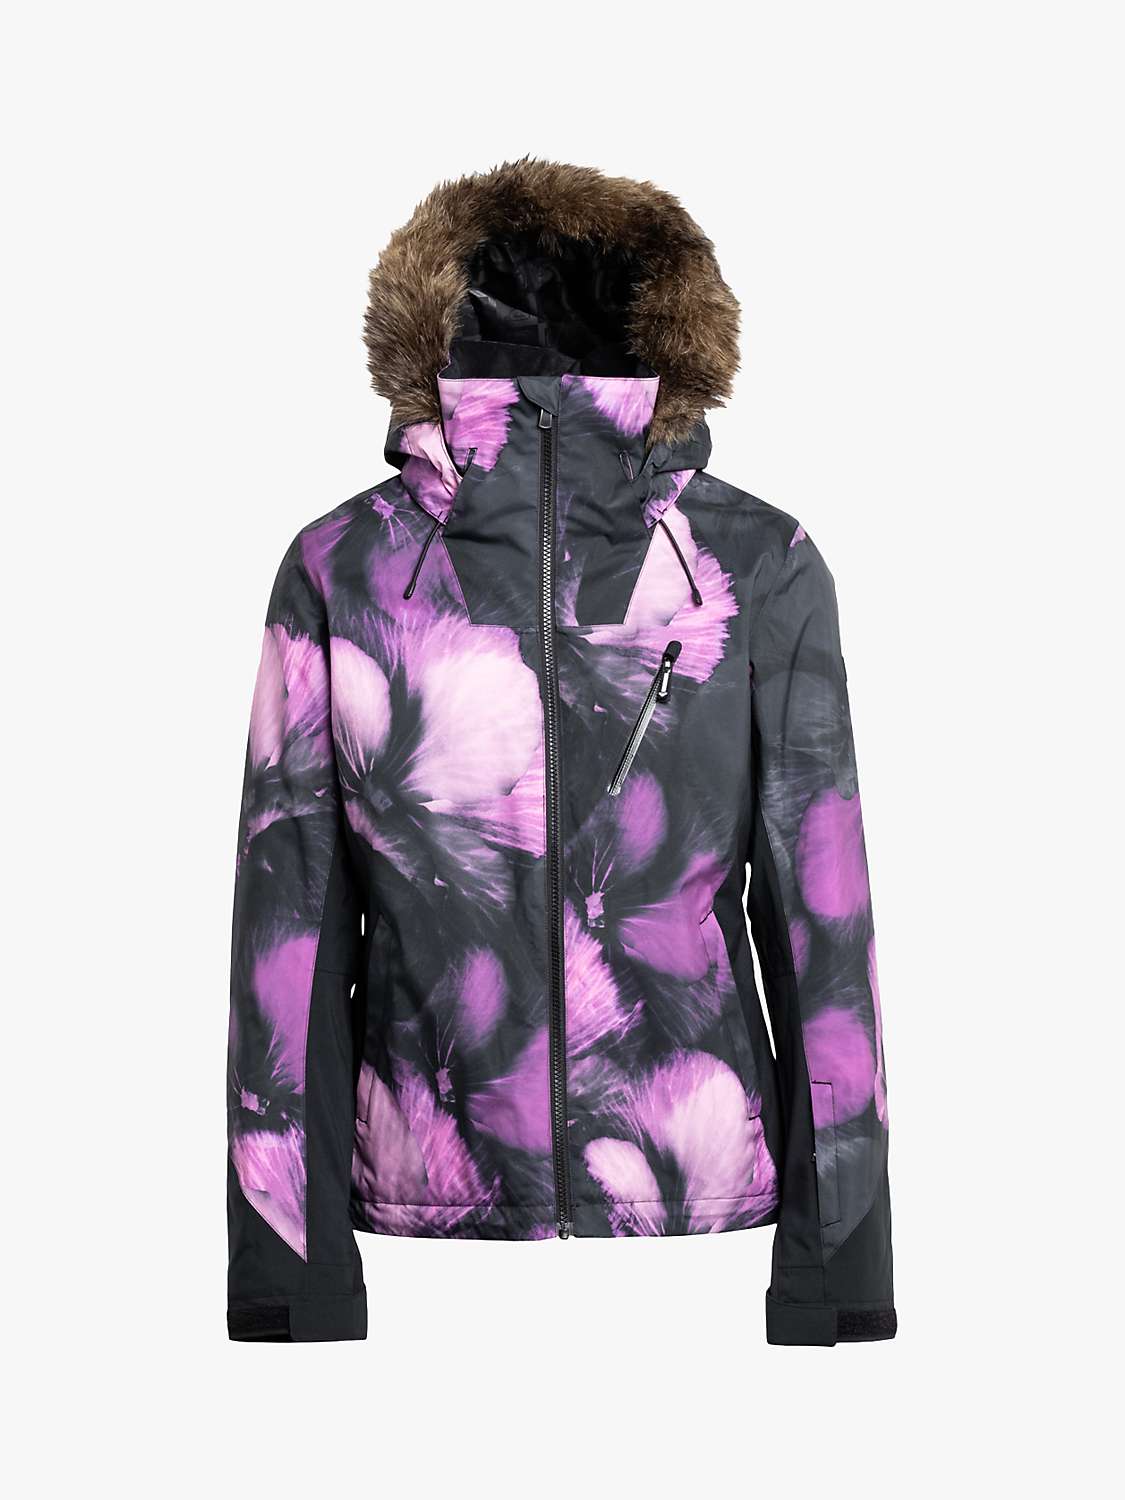 Buy Roxy Women's Jet Ski Jacket, Black Pansy Online at johnlewis.com